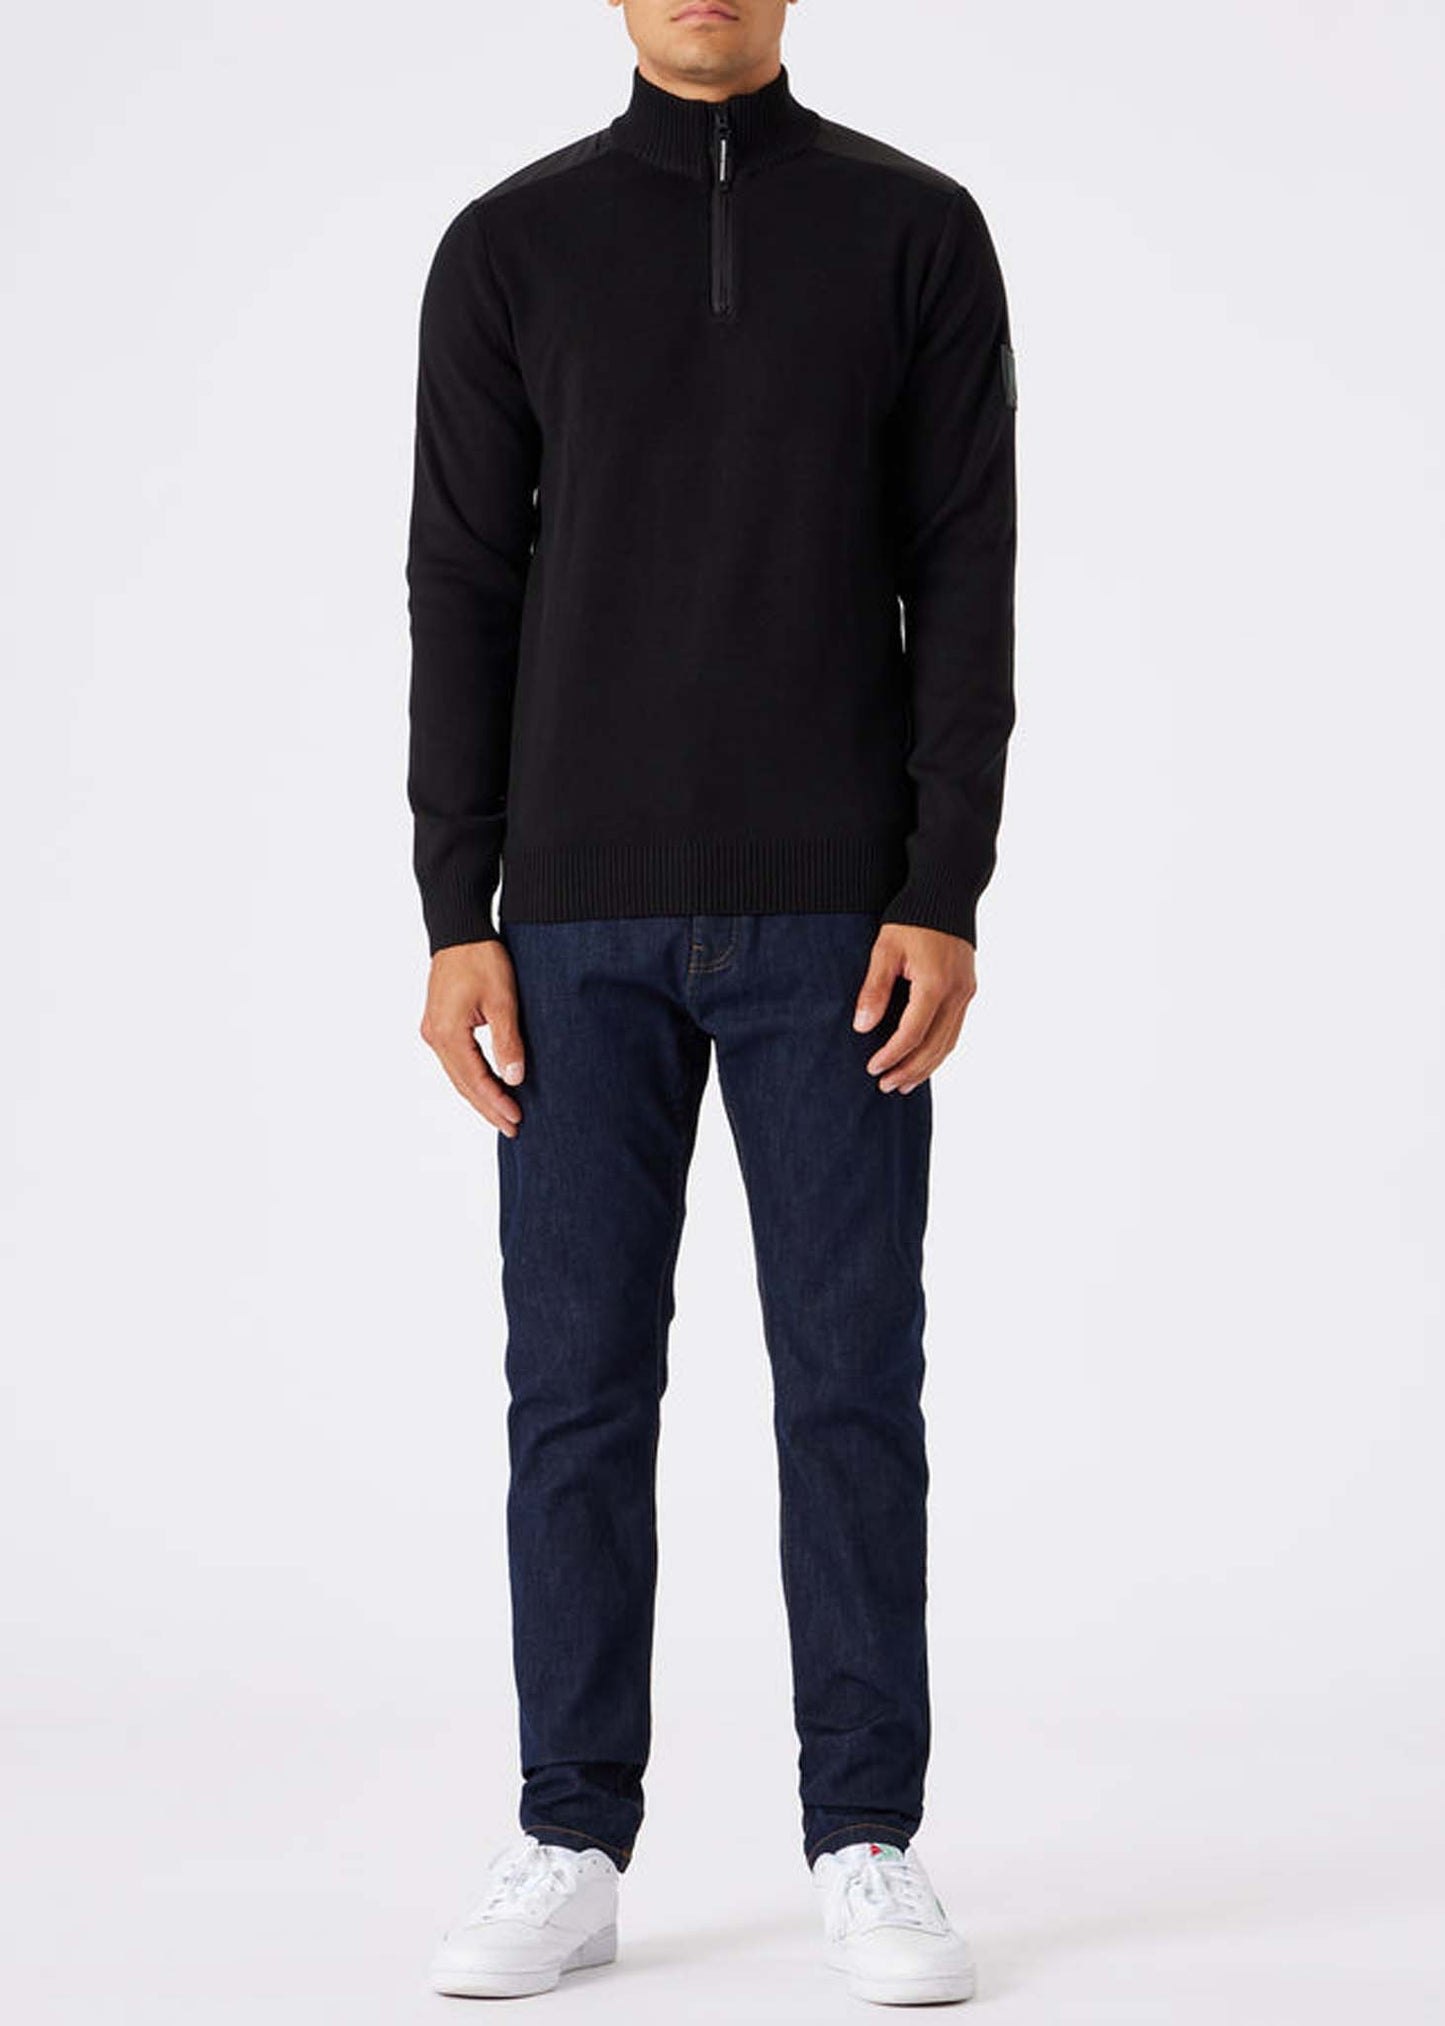 Weekend Offender quarter zip sweater trui black